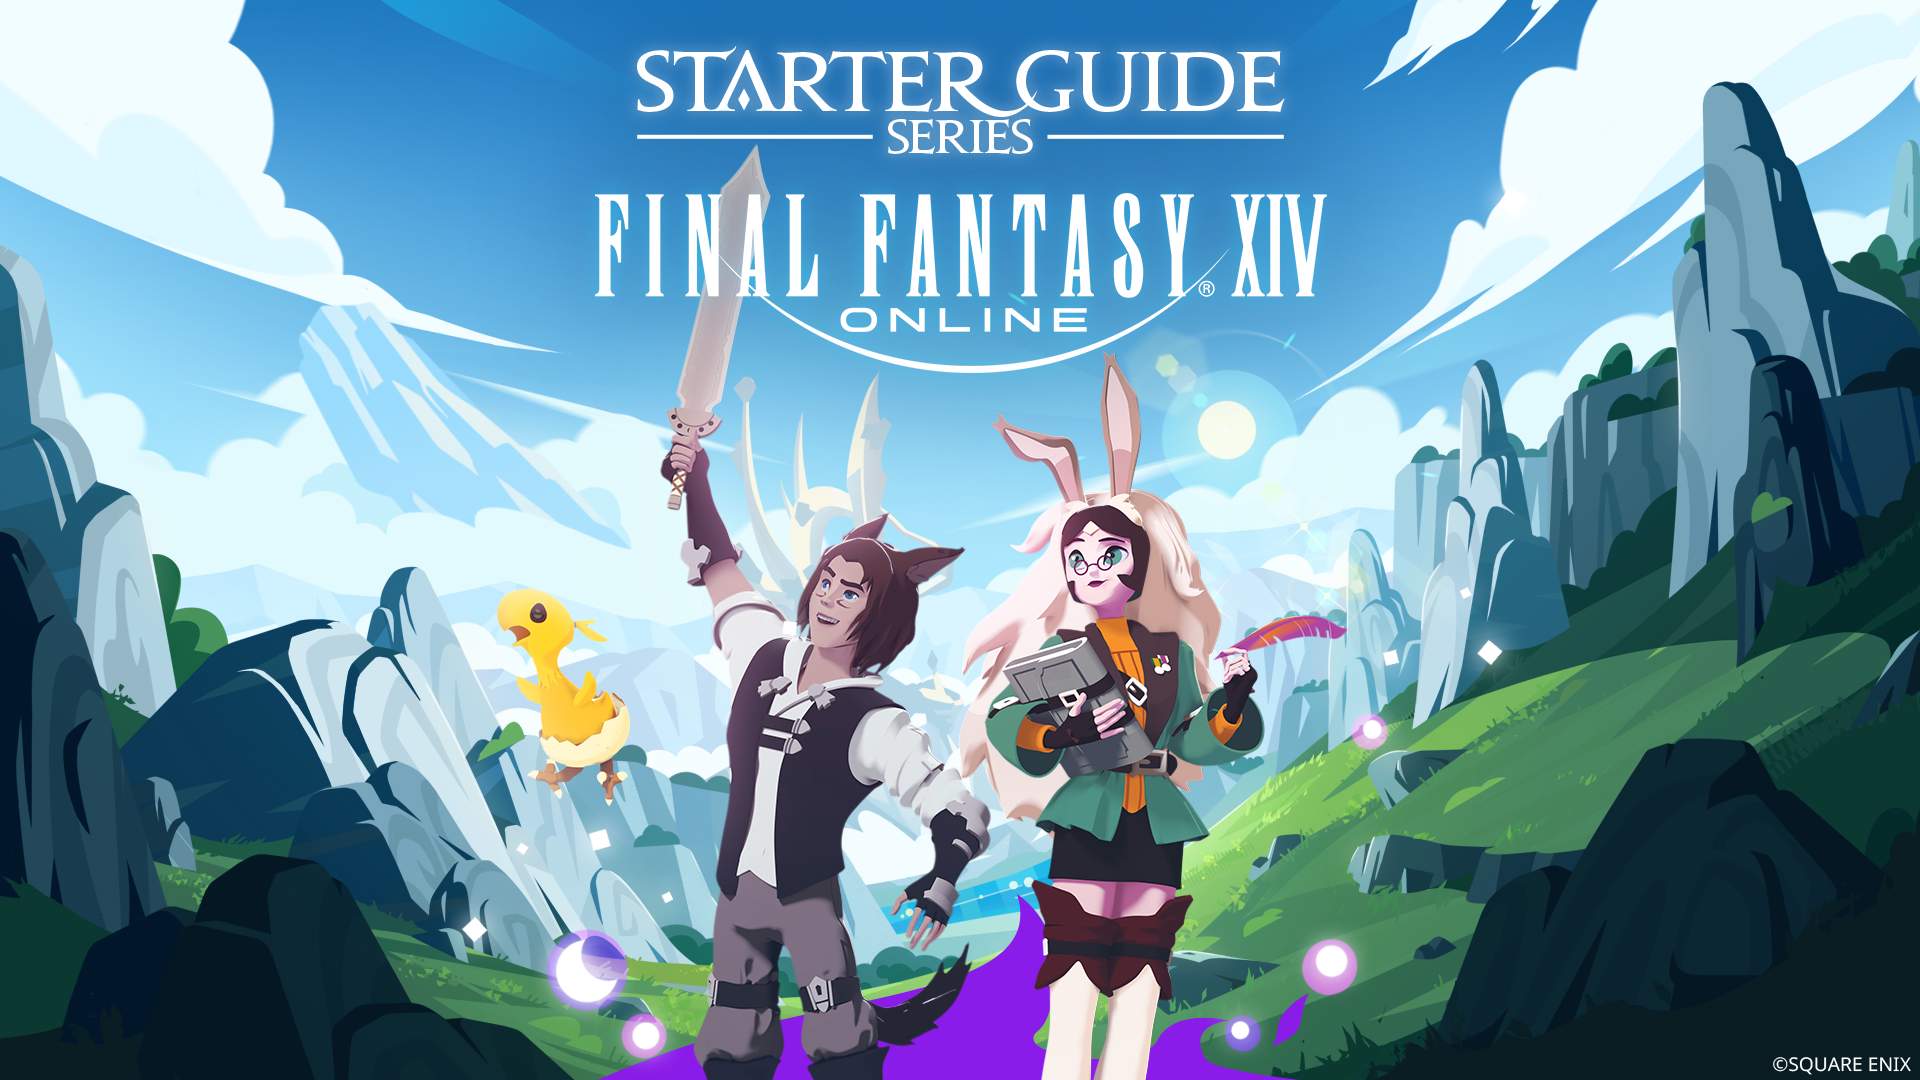 FINAL FANTASY XIV Online Starter Guide Series